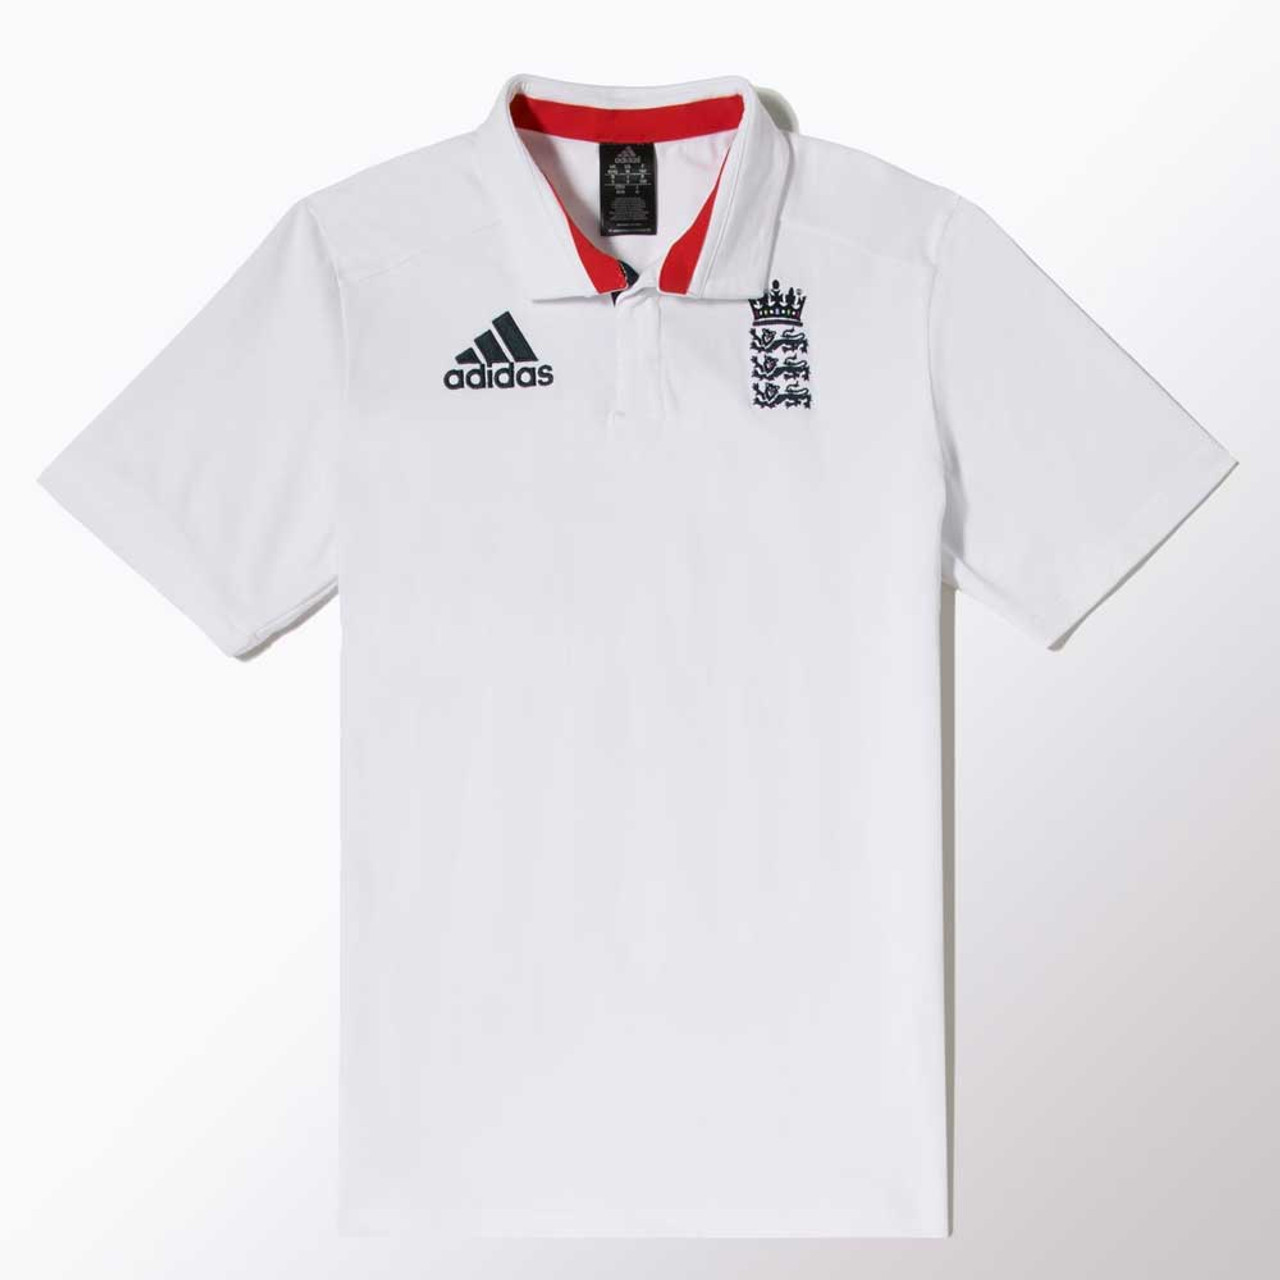 adidas cricket jersey